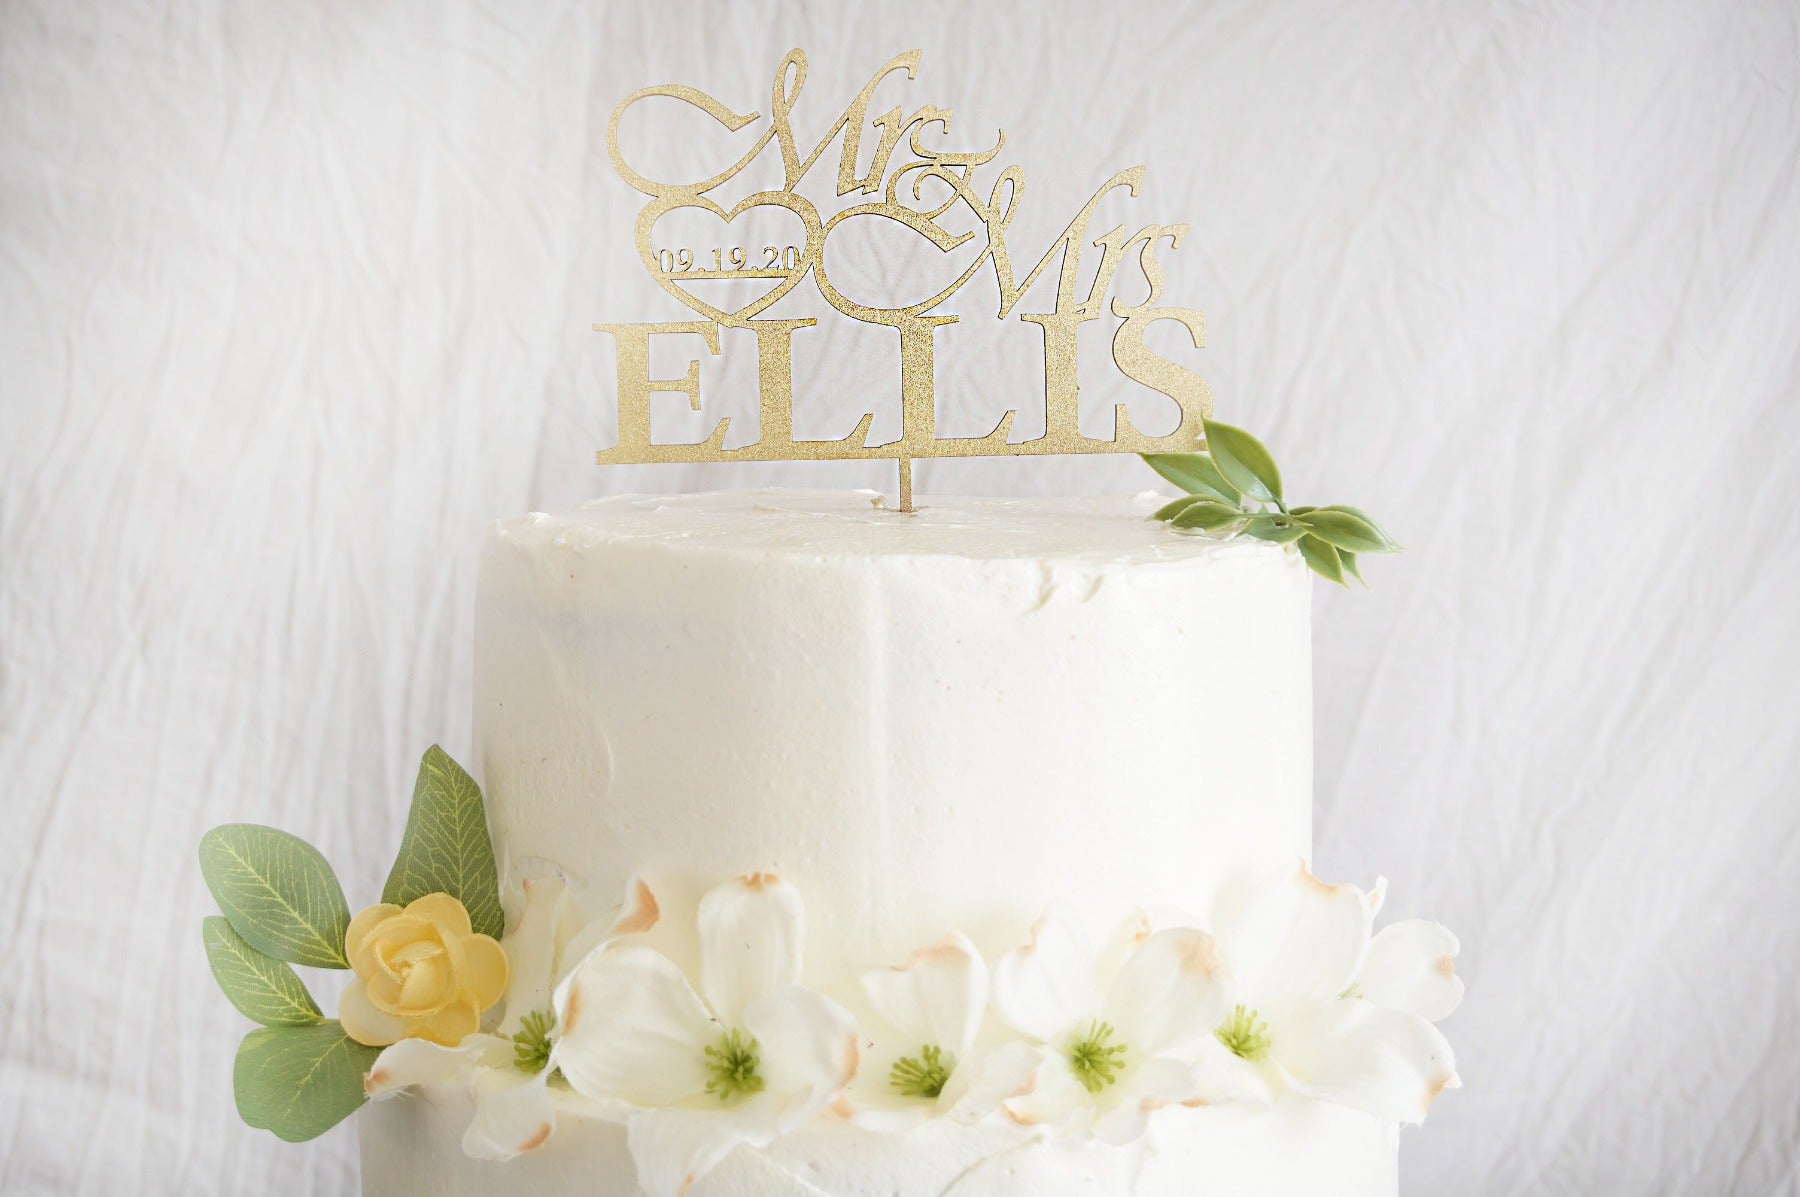 Mr. & Mrs. Wedding Cake Topper | Custom Cake Topper Personalized | Engagement or Anniversary Cake Topper | Wood Cake Topper, Cake Toppers, designLEE Studio, designLEE Studio